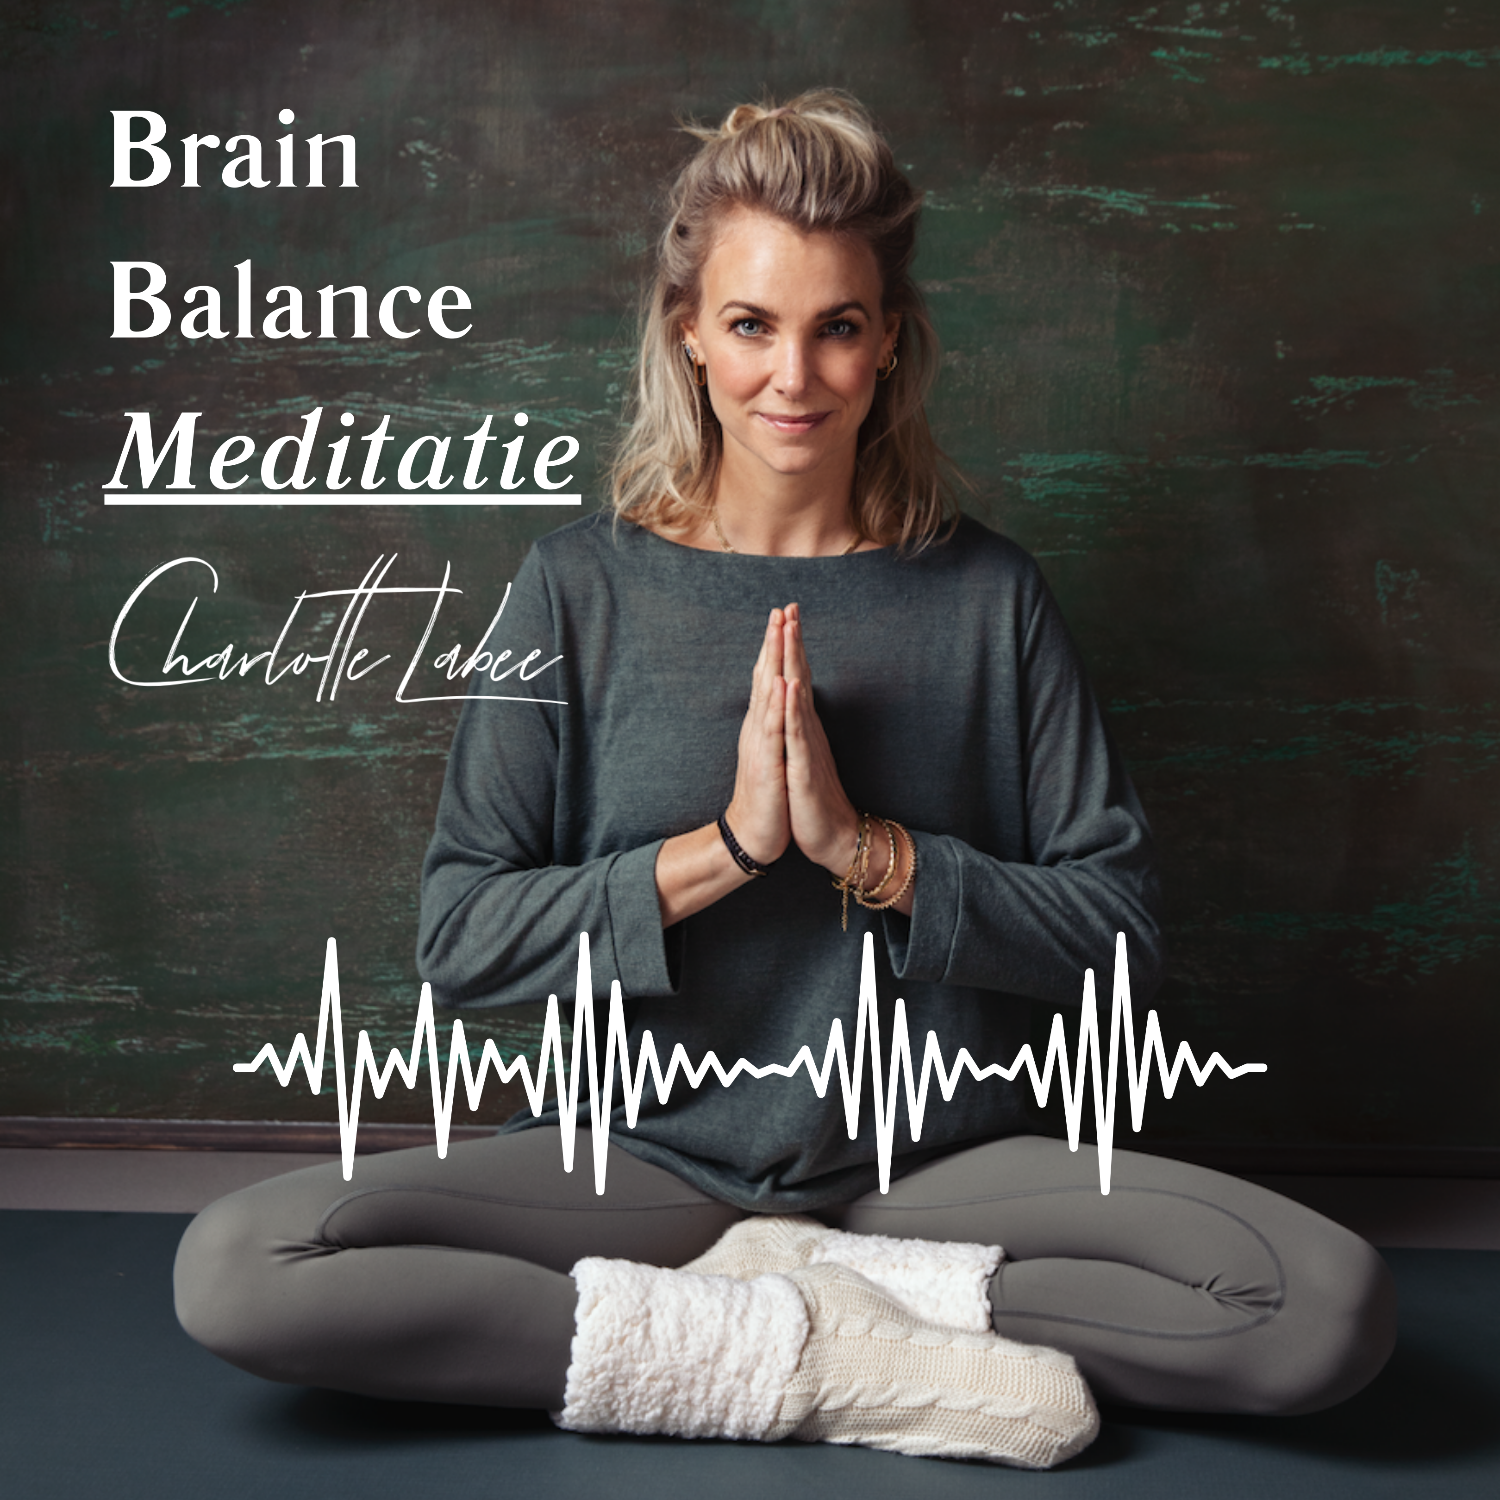 Brain Balance Meditation Package Charlotte Labee